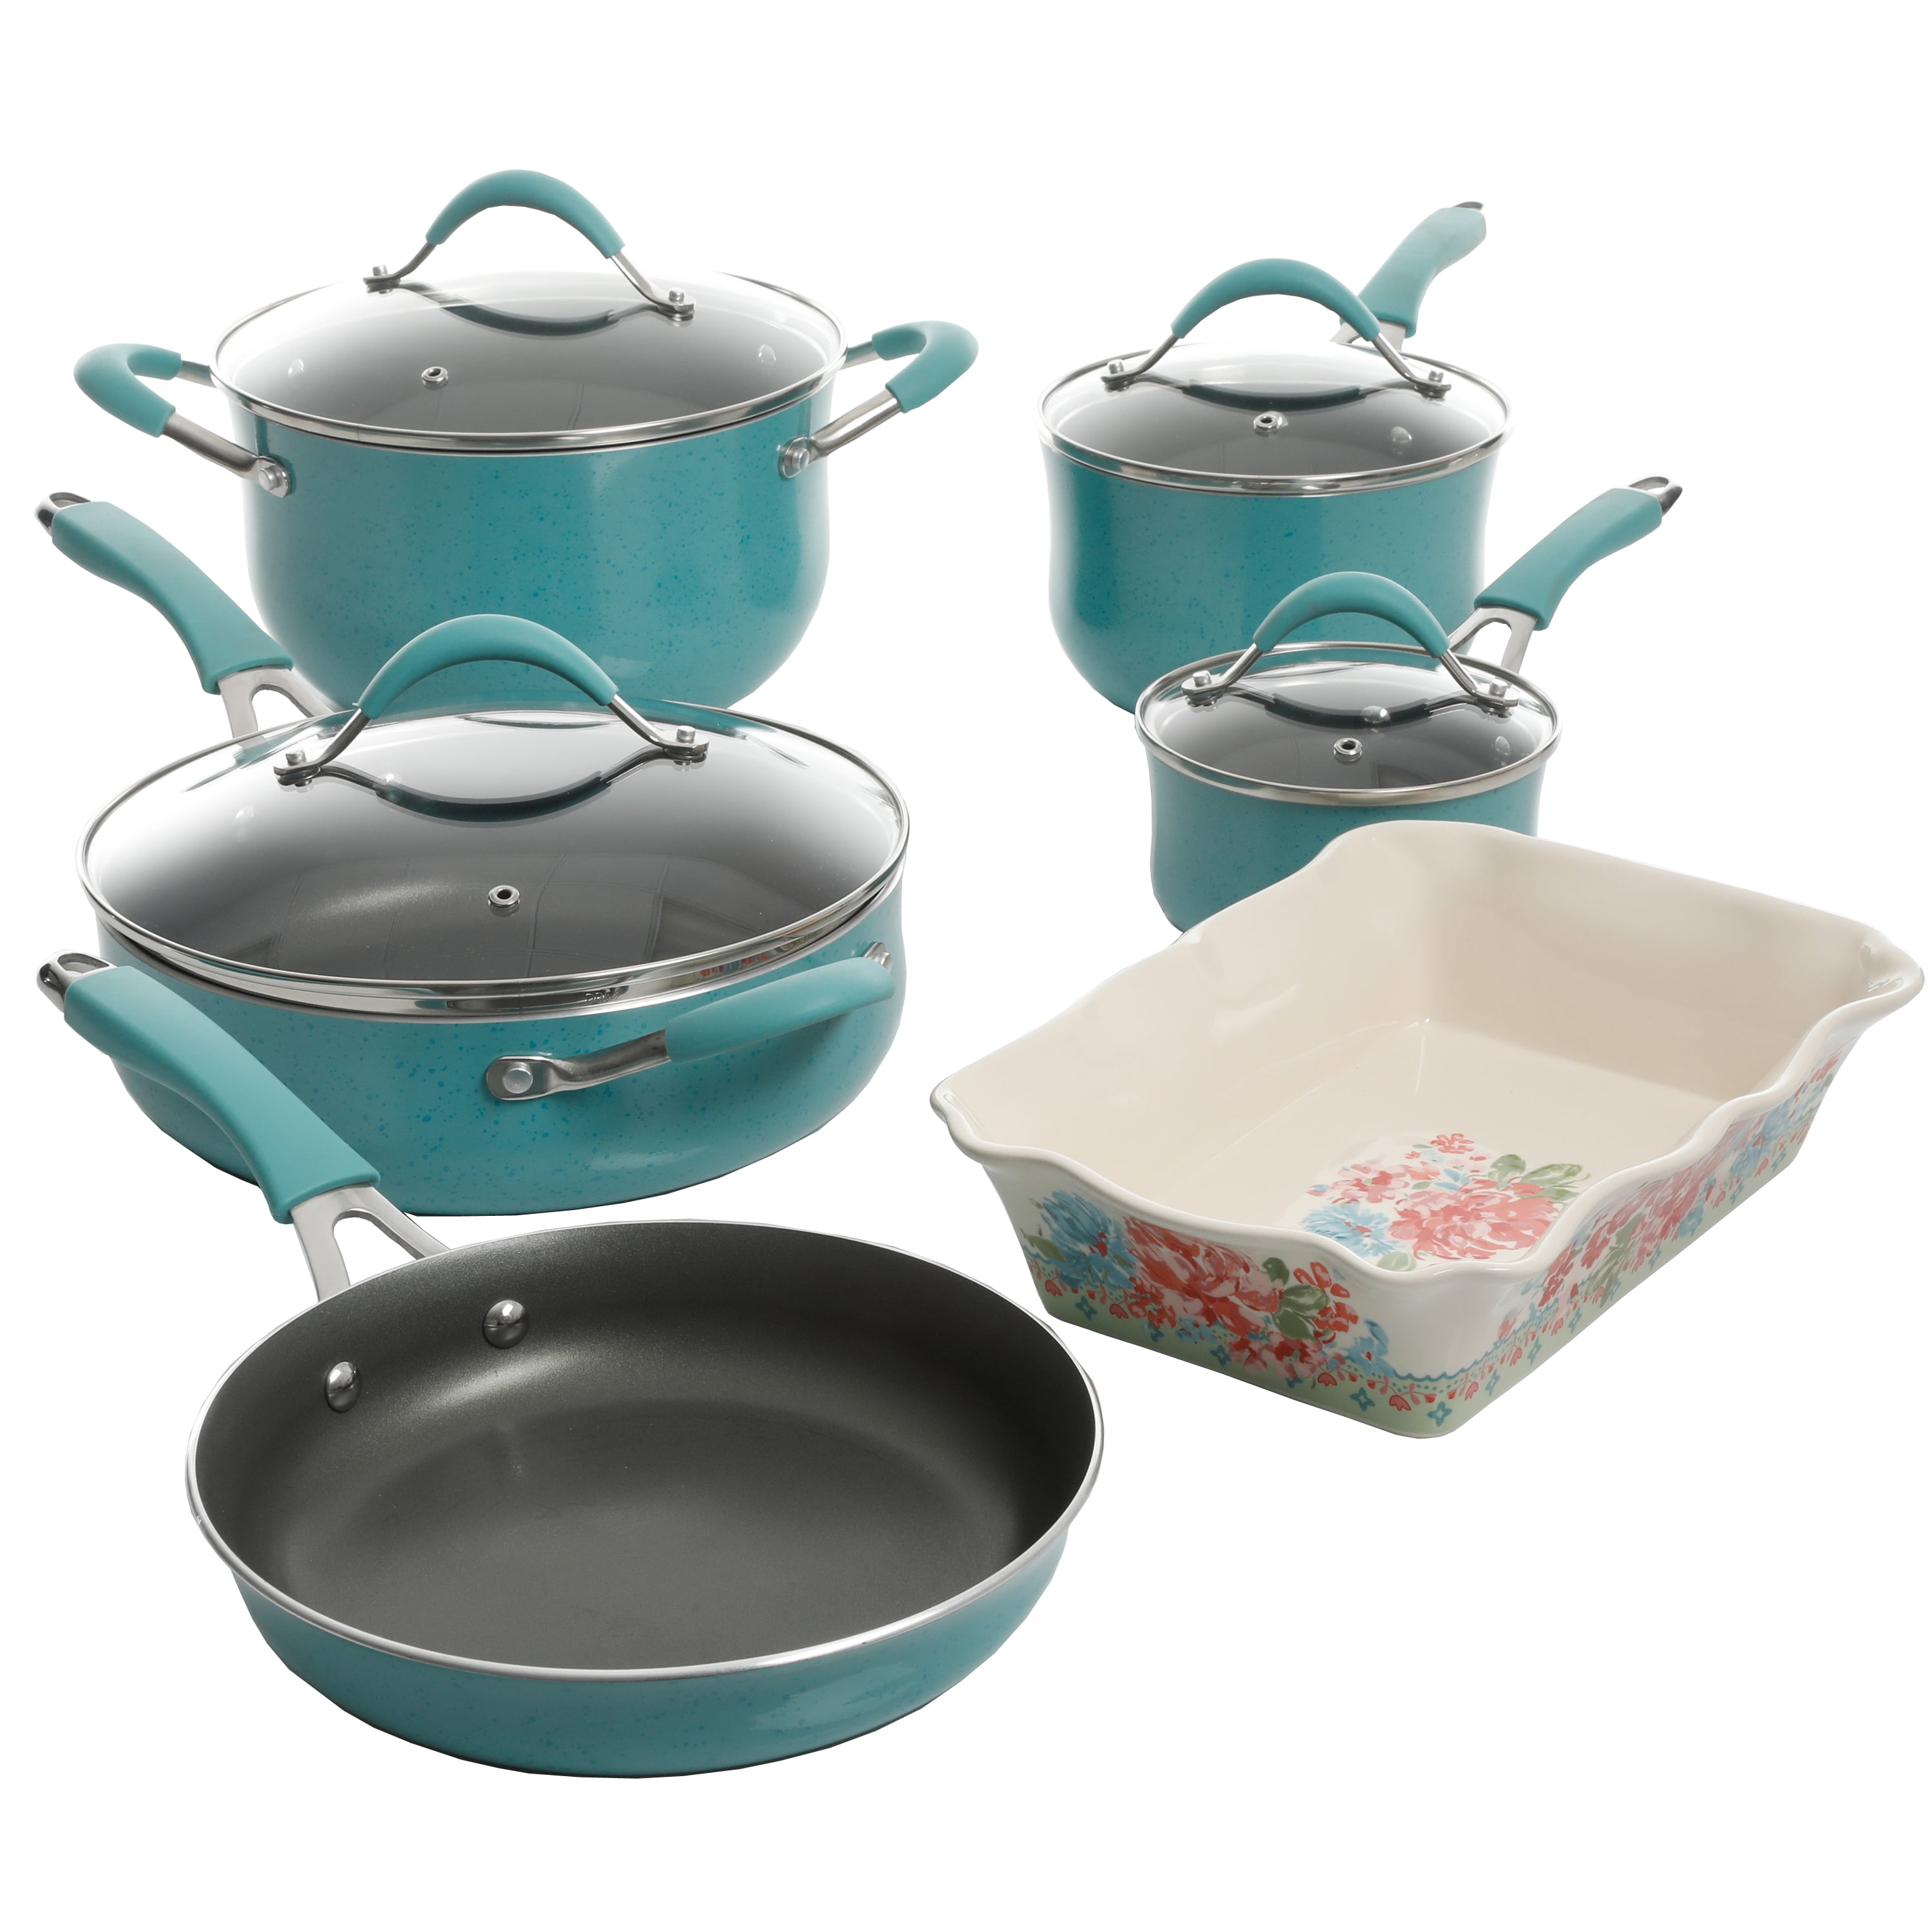 Details about   The Pioneer Woman 5-Piece Cookware Set Frontier Nonstick Pots Pans Turquoise 